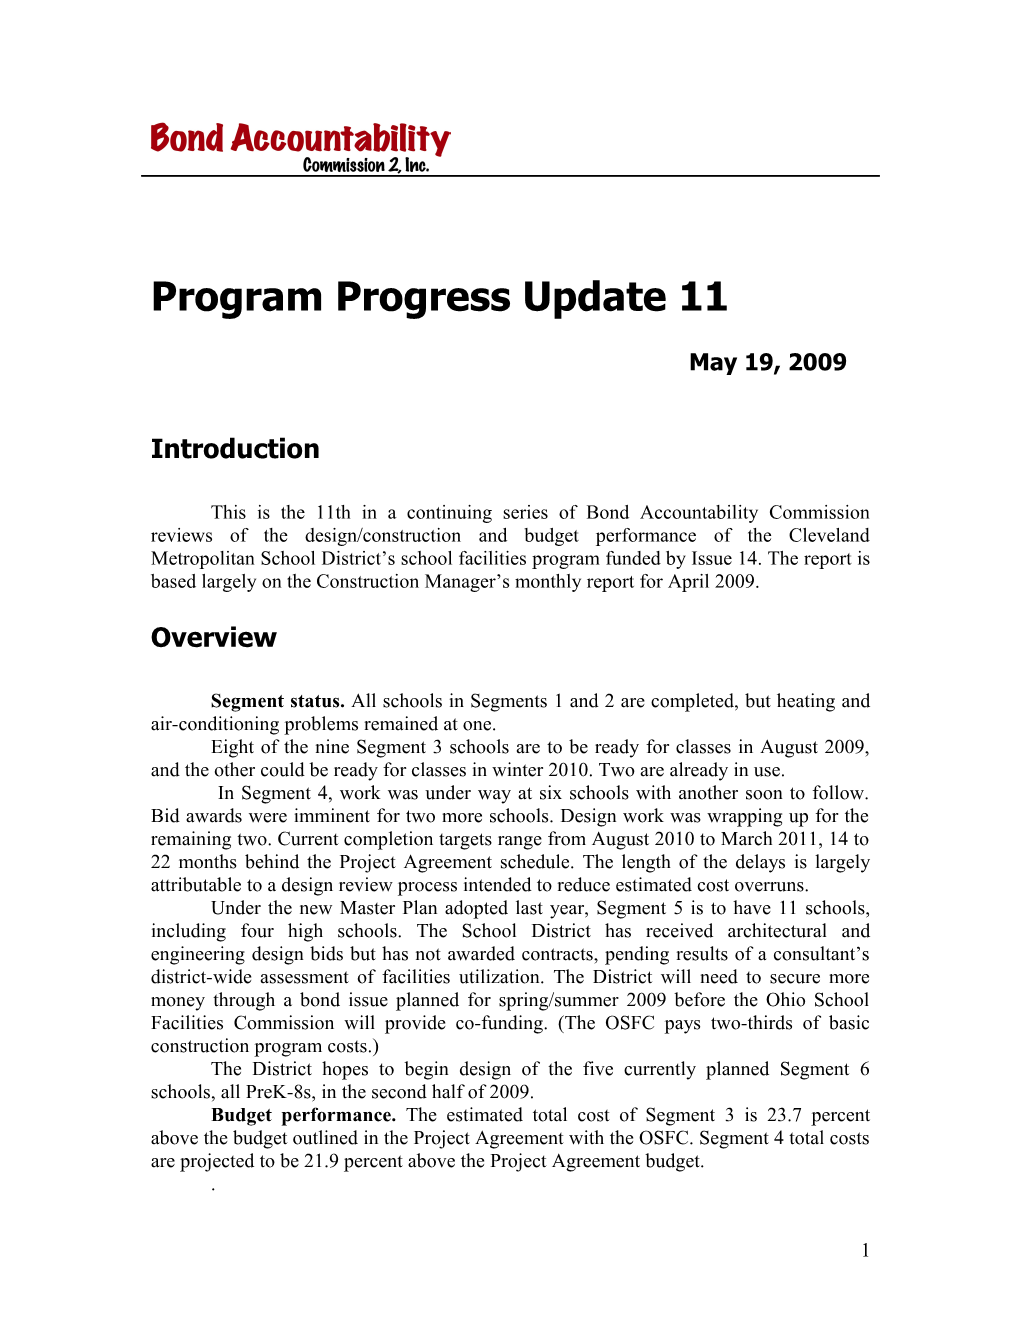 Program Progress Update11